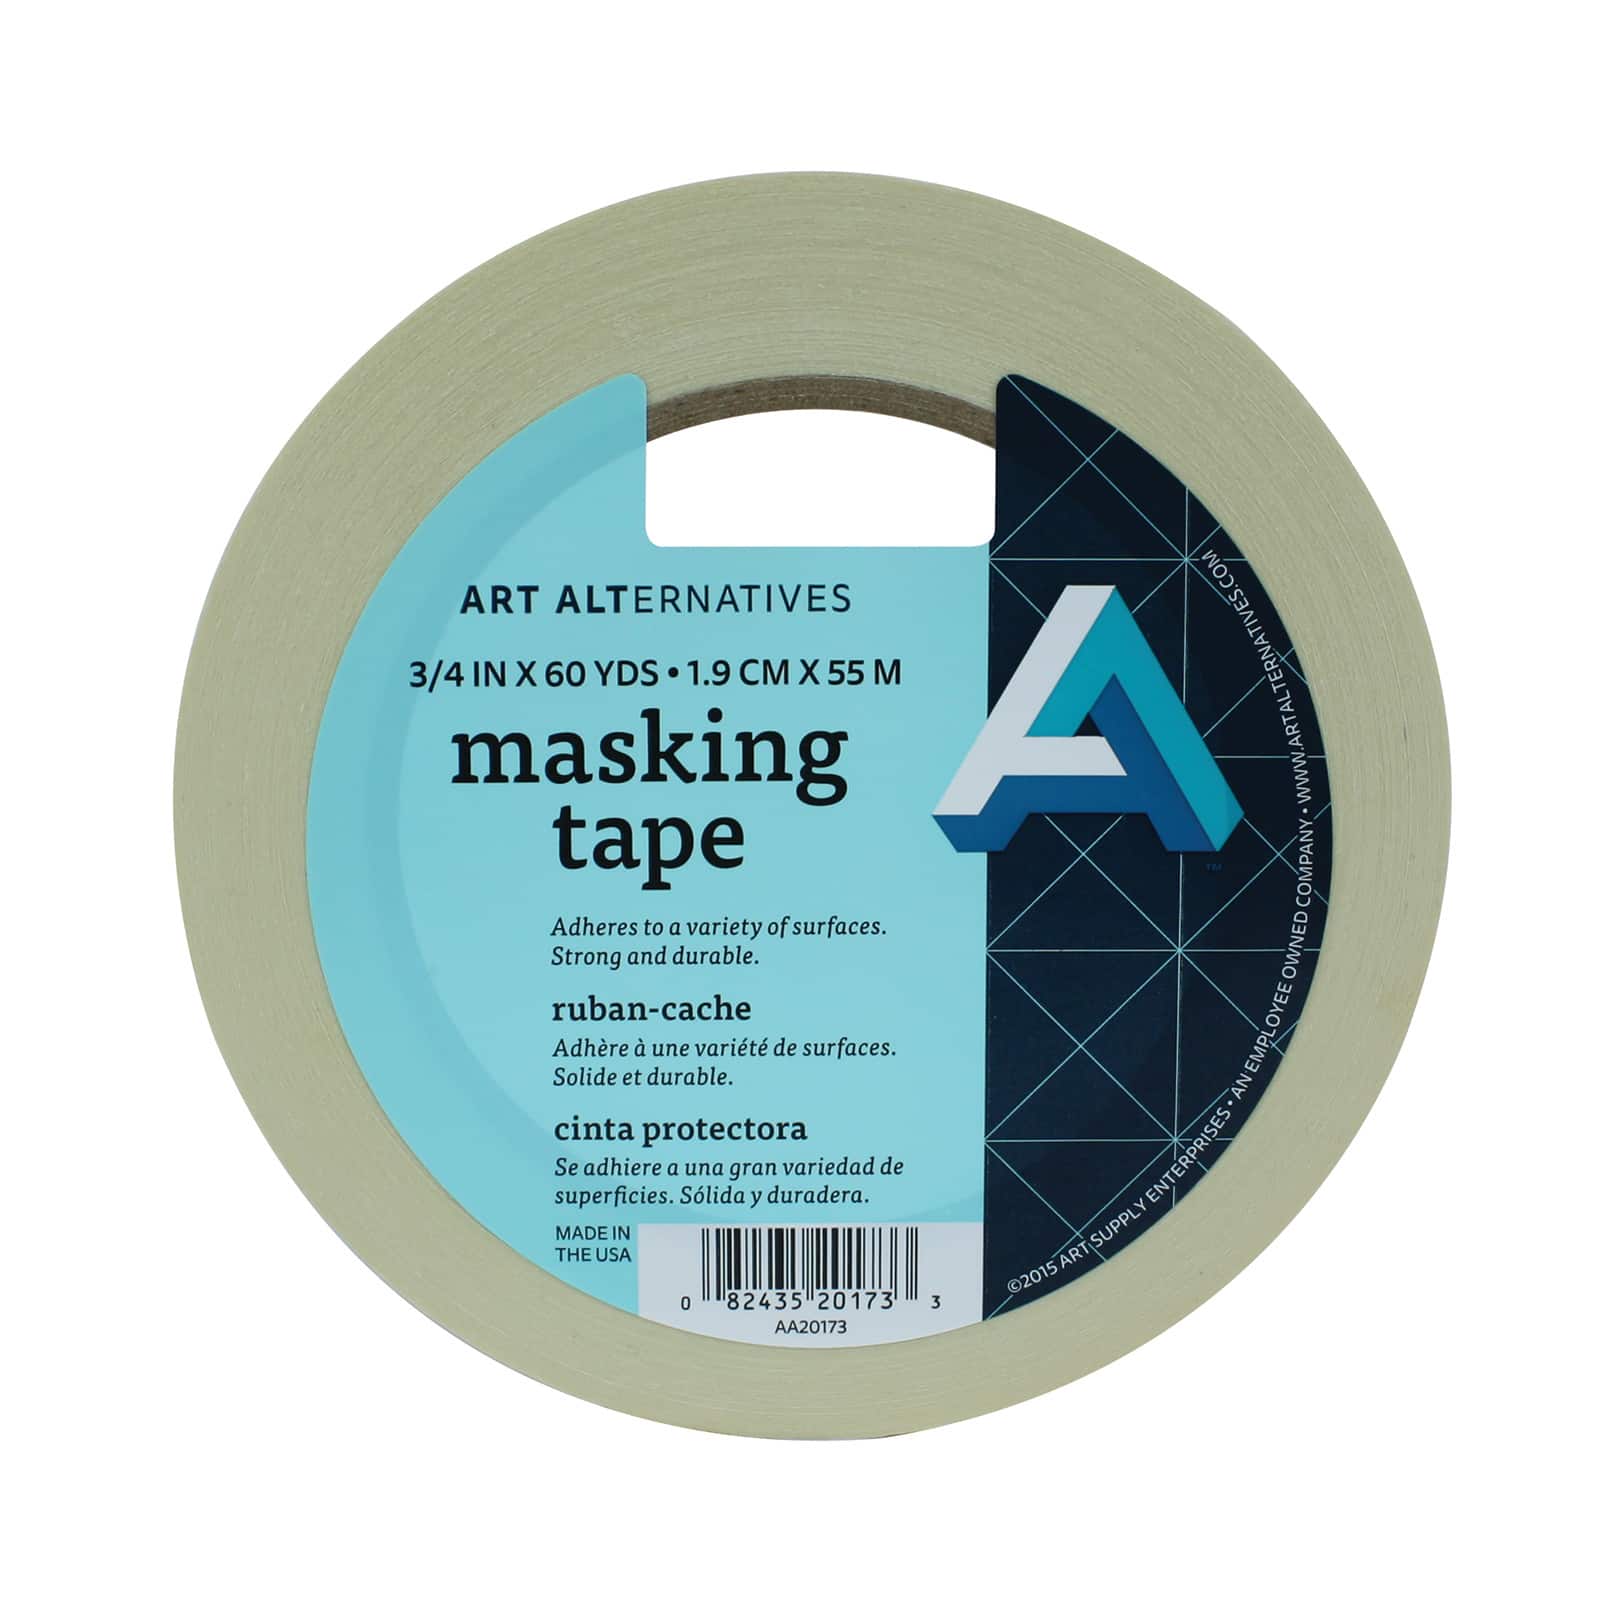 masking tape art